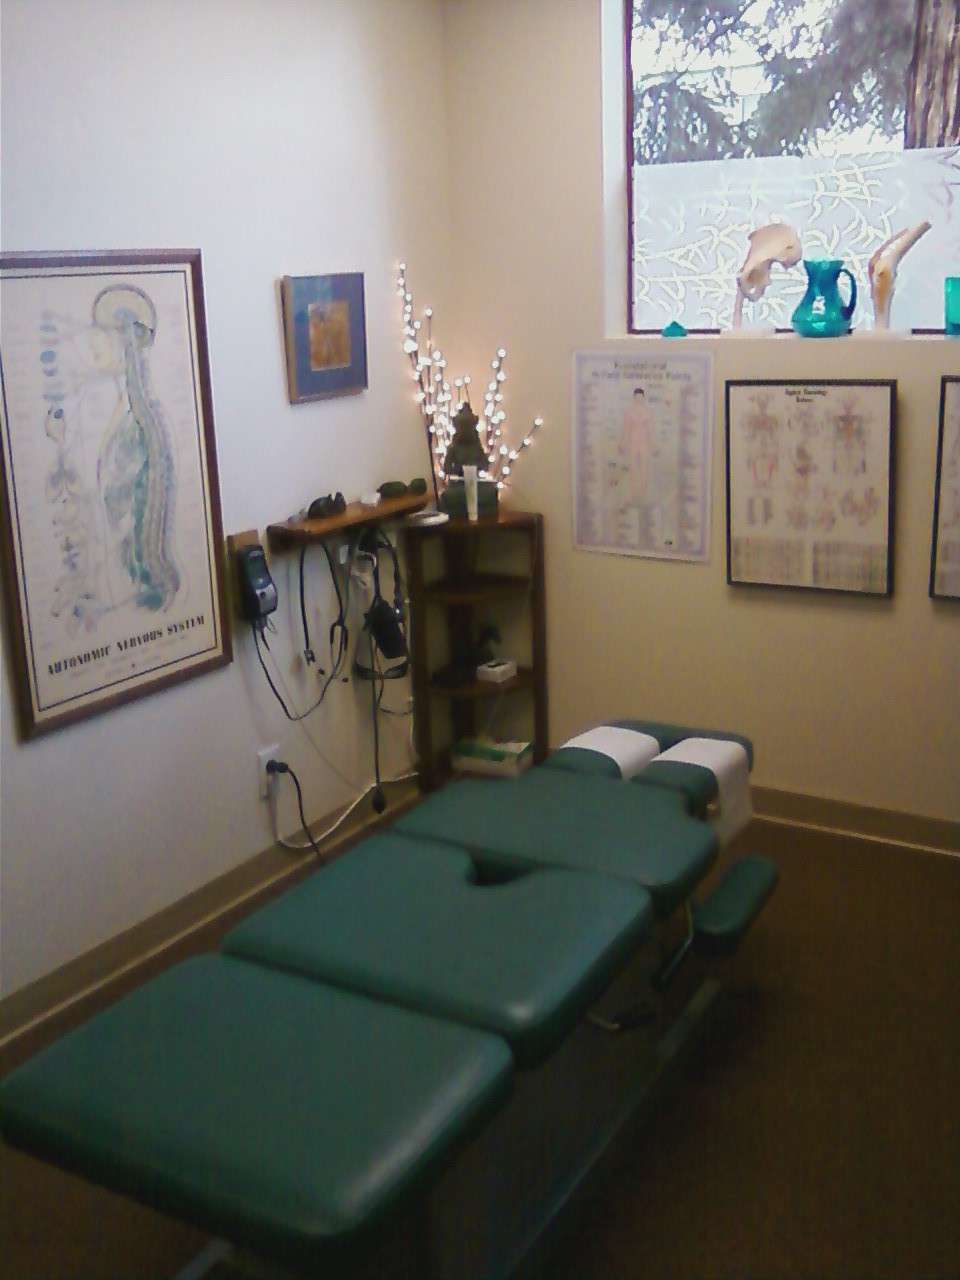 Laura Barry, DC Chiropractic Healing Arts | 120 Pleasant Hill Ave N # 170, Sebastopol, CA 95472 | Phone: (707) 824-0790